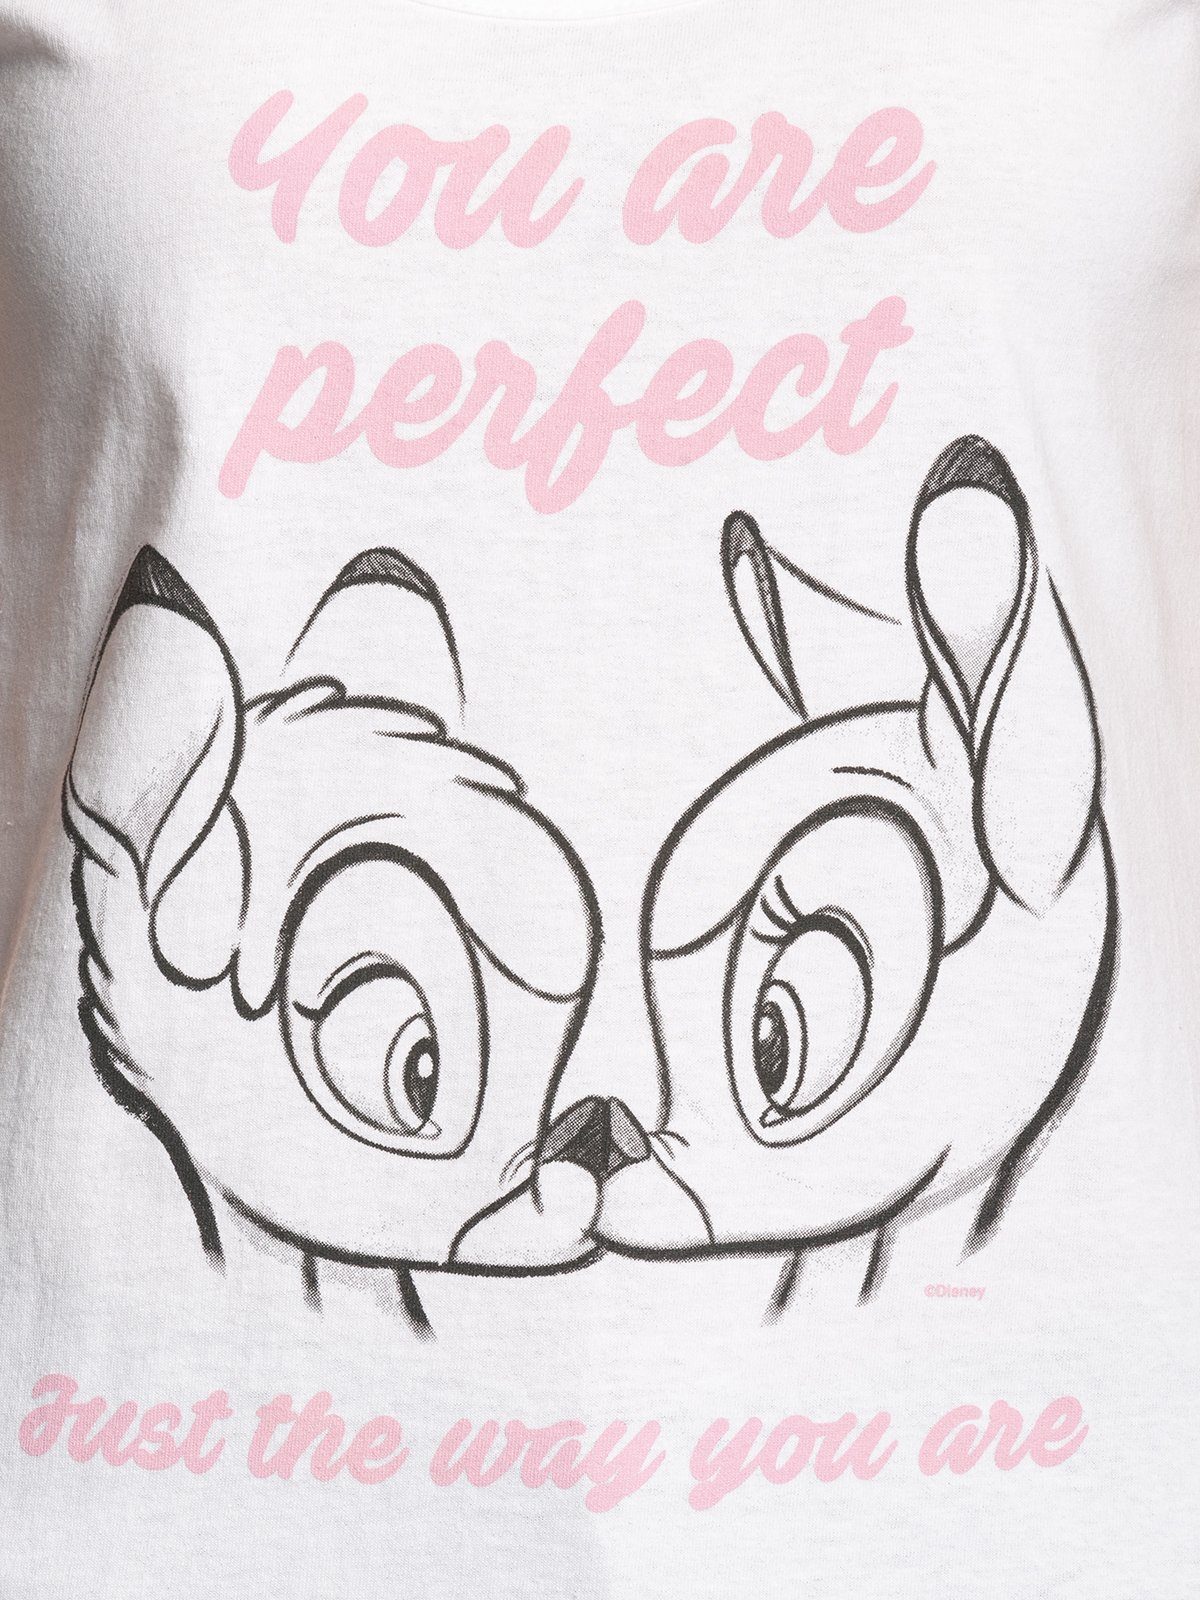 Damen Tops Disney Tanktop Bambi You Are Perfect